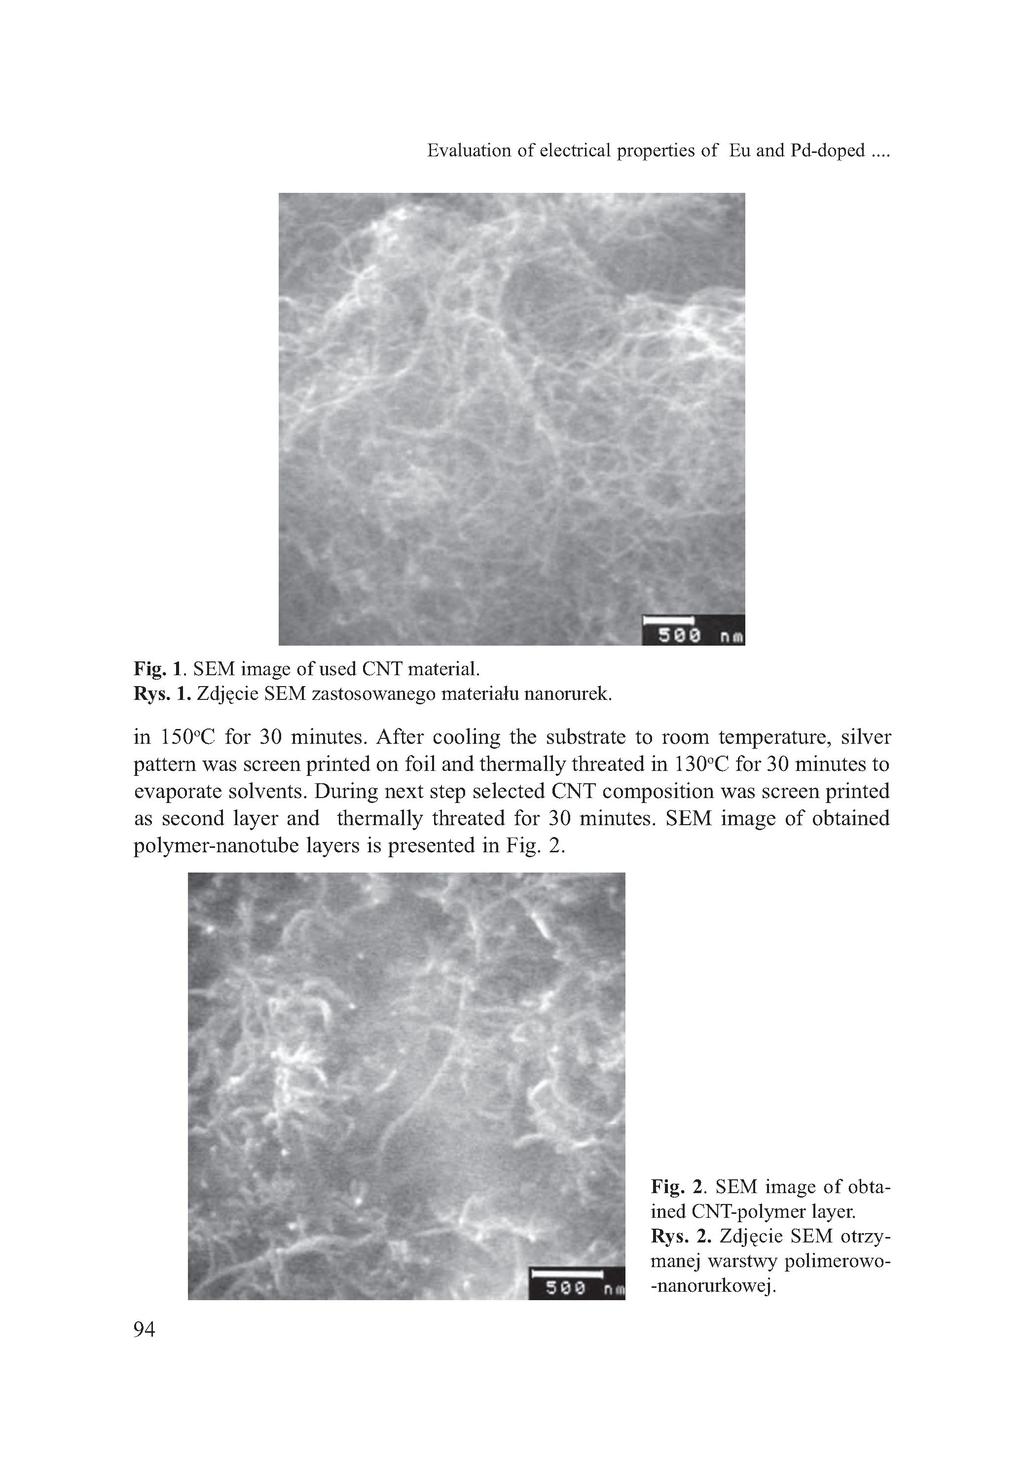 Evaluation of electrical properties of Eu and Pd-doped... Fig. 1. SEM image of used CNT material. Rys. 1. Zdjęcie SEM zastosowanego materiału nanorurek. in 150 o C for 30 minutes.